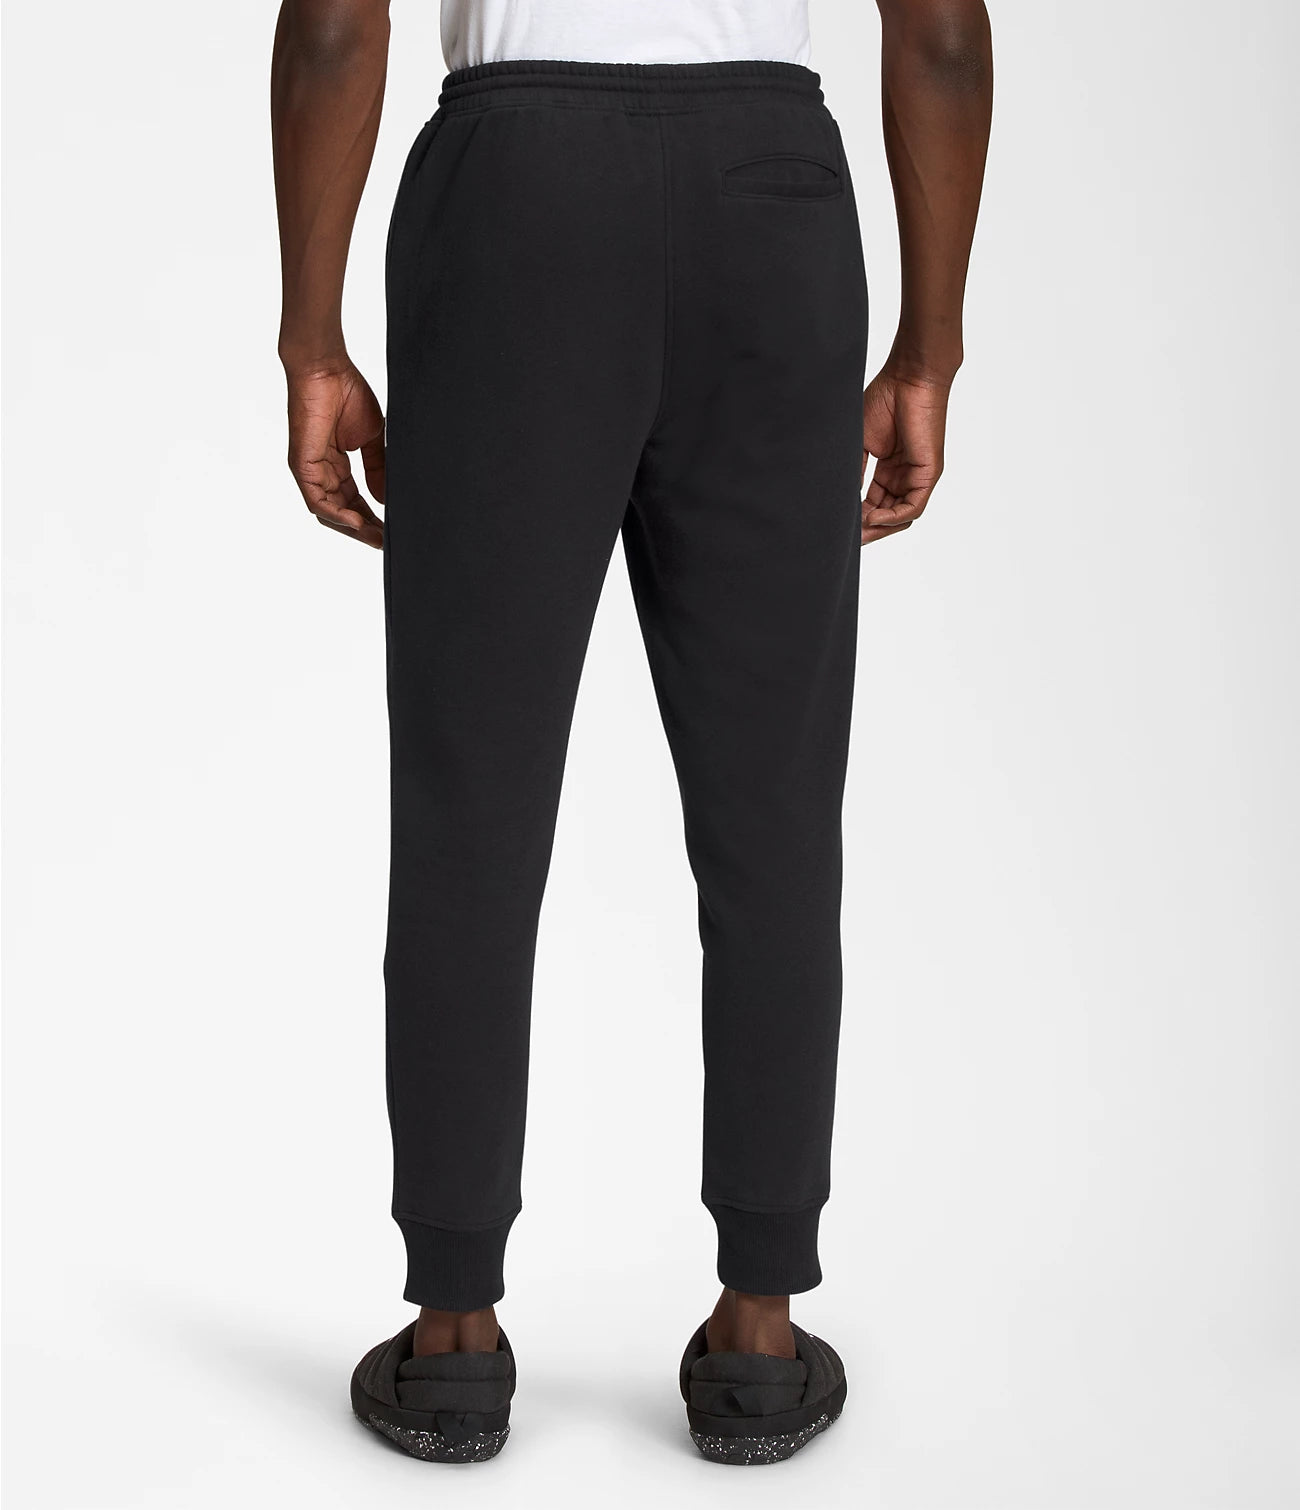 Pantalon de Jogging Box NSE Pour Hommes - TNF Black / TNF White